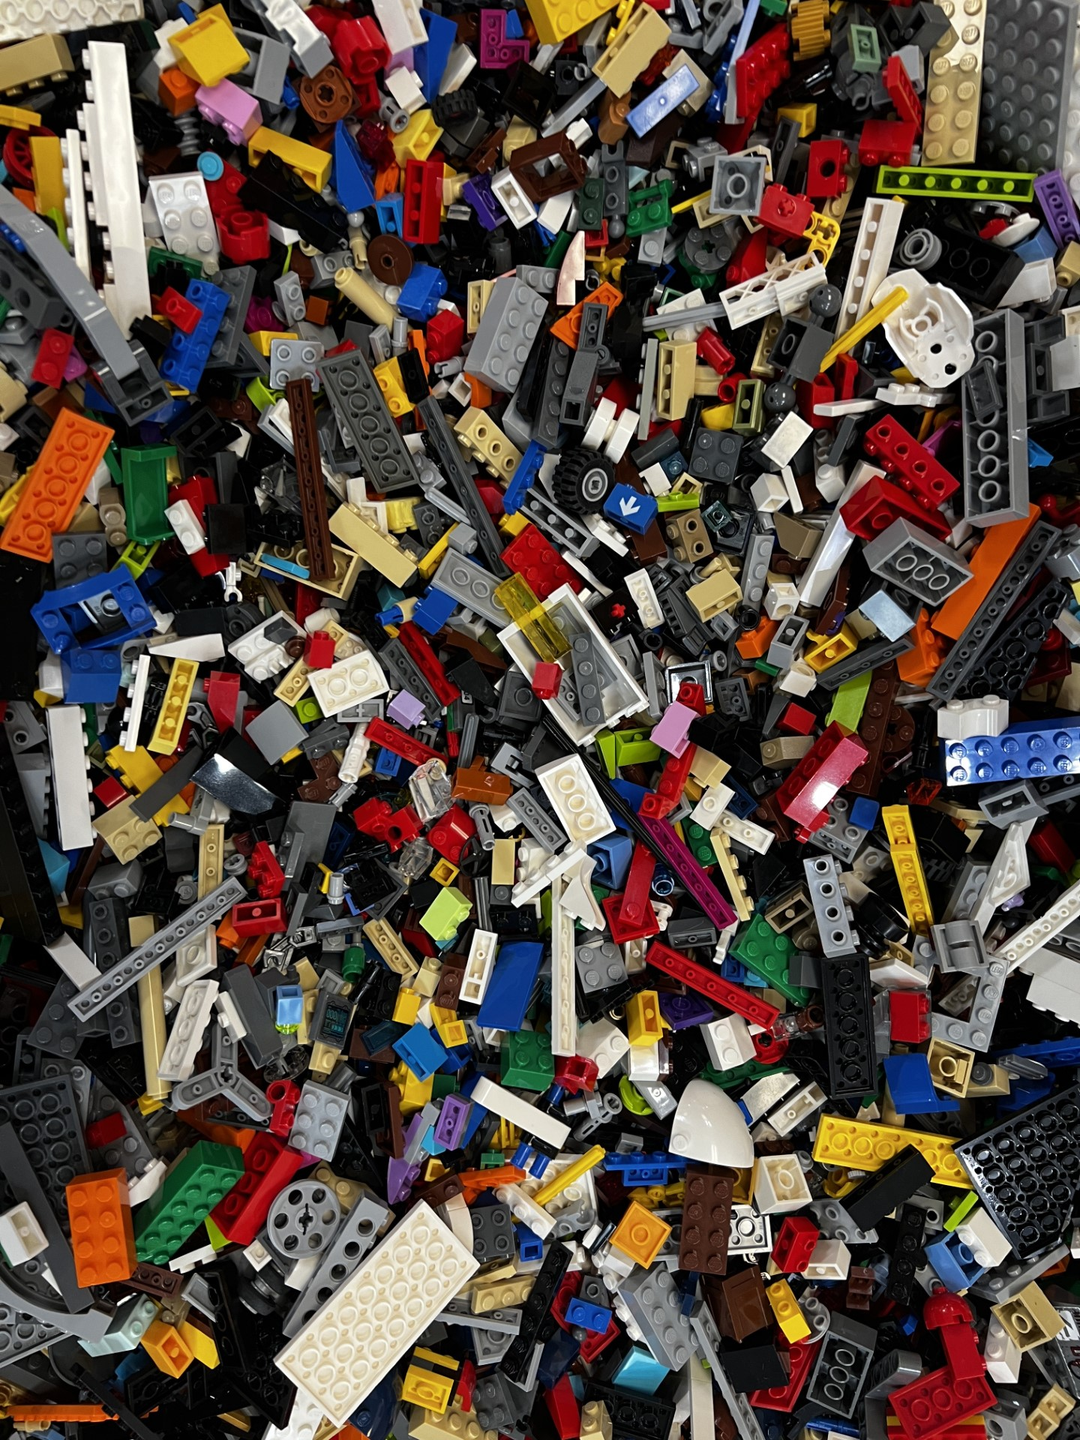 Atlanta Brick Co largest Lego(R) selection in the world Newnan, GA USA